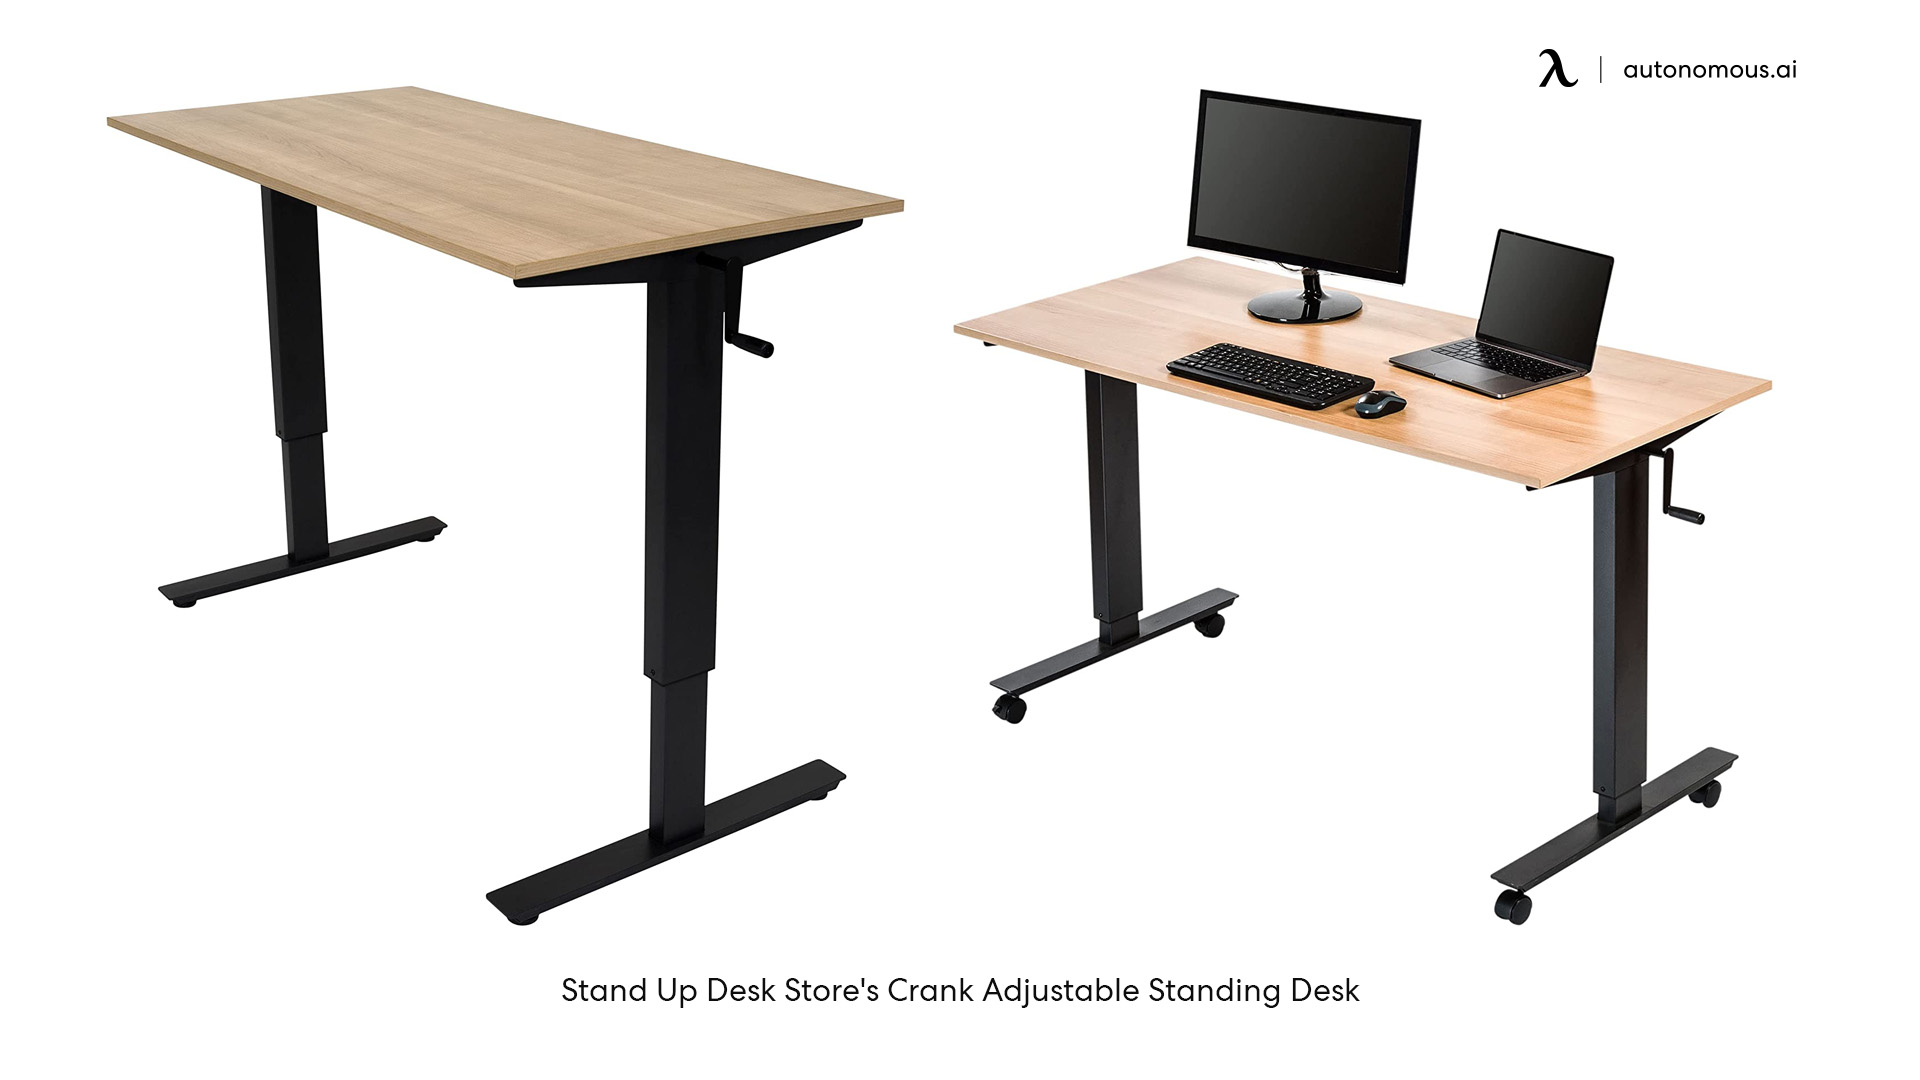 Stand Up Desk Store's Crank Adjustable Standing Desk